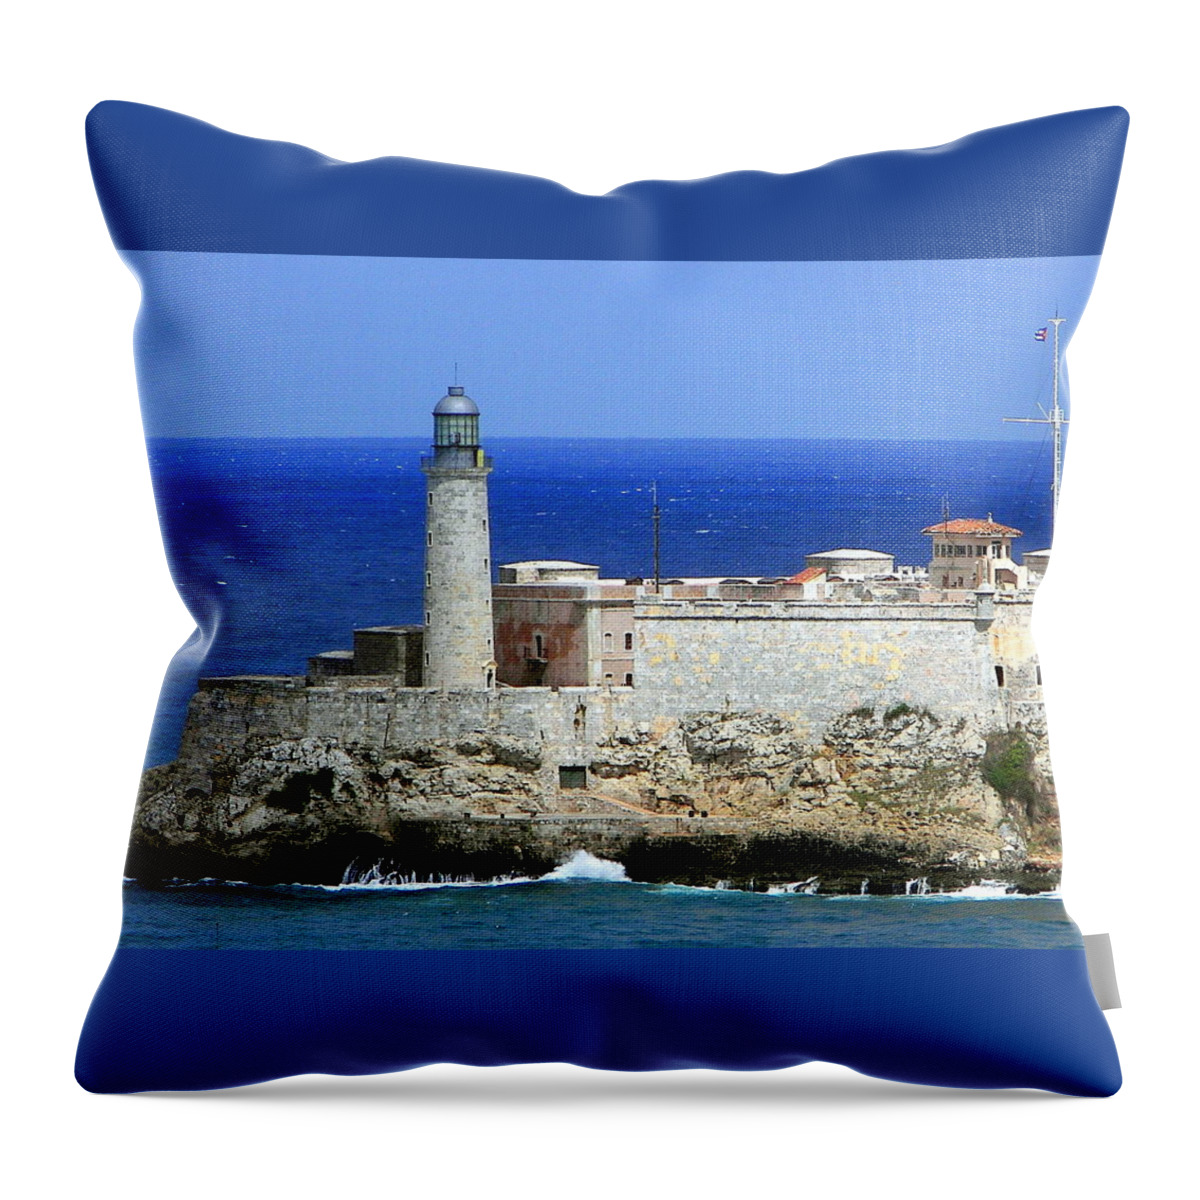 Cuba Throw Pillow featuring the photograph Havana Harbor Lighthouse by Karen Wiles